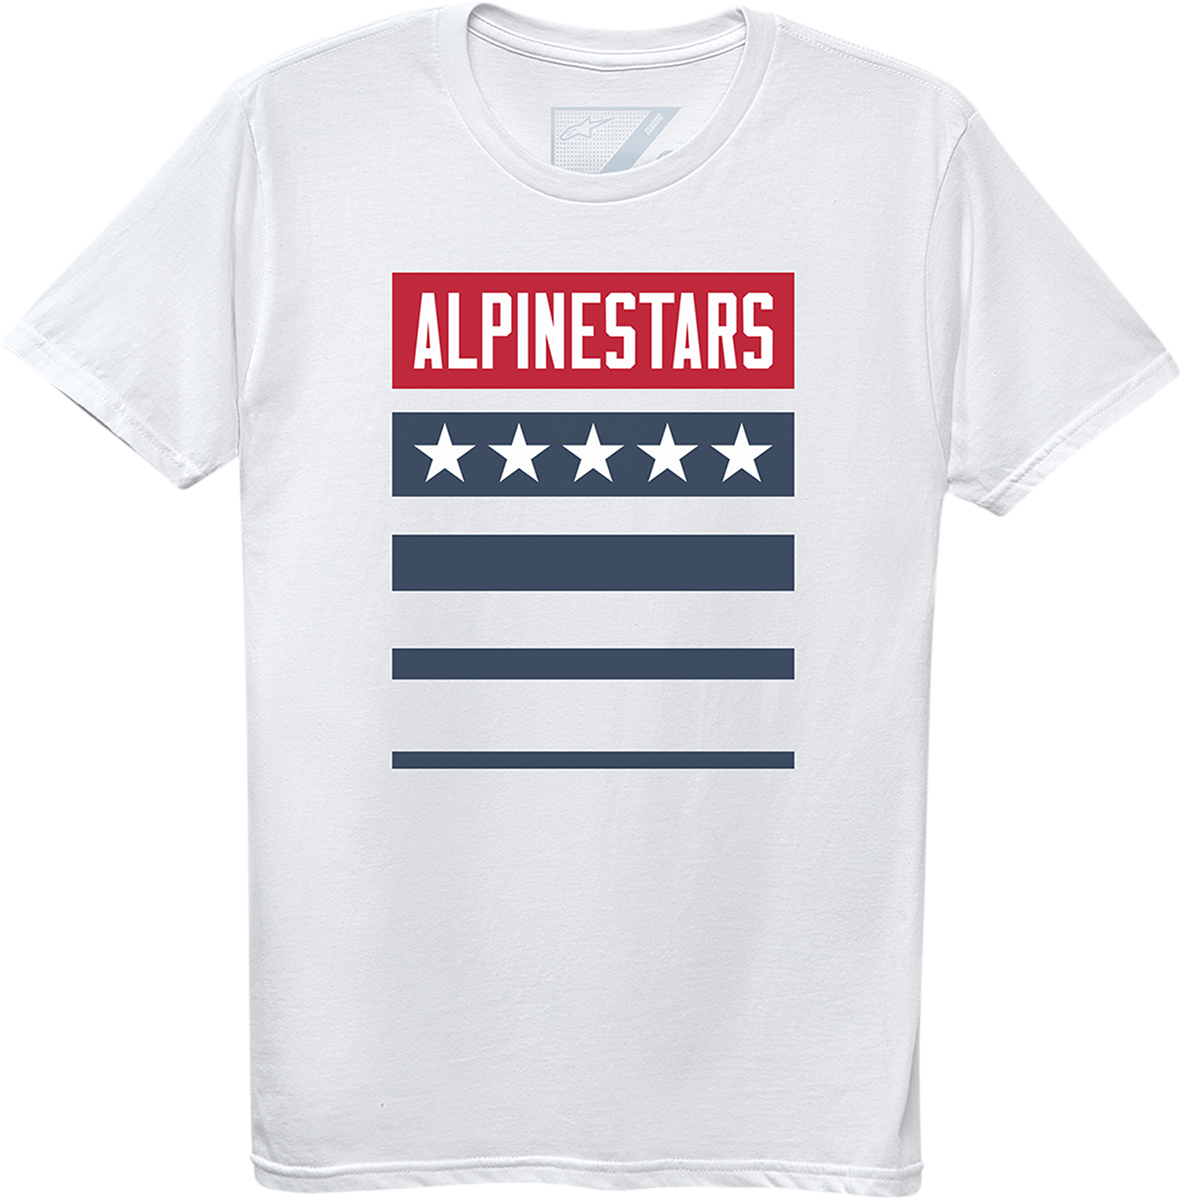 Camiseta nacional ALPINESTARS - Blanca - Mediana 12307210420M 